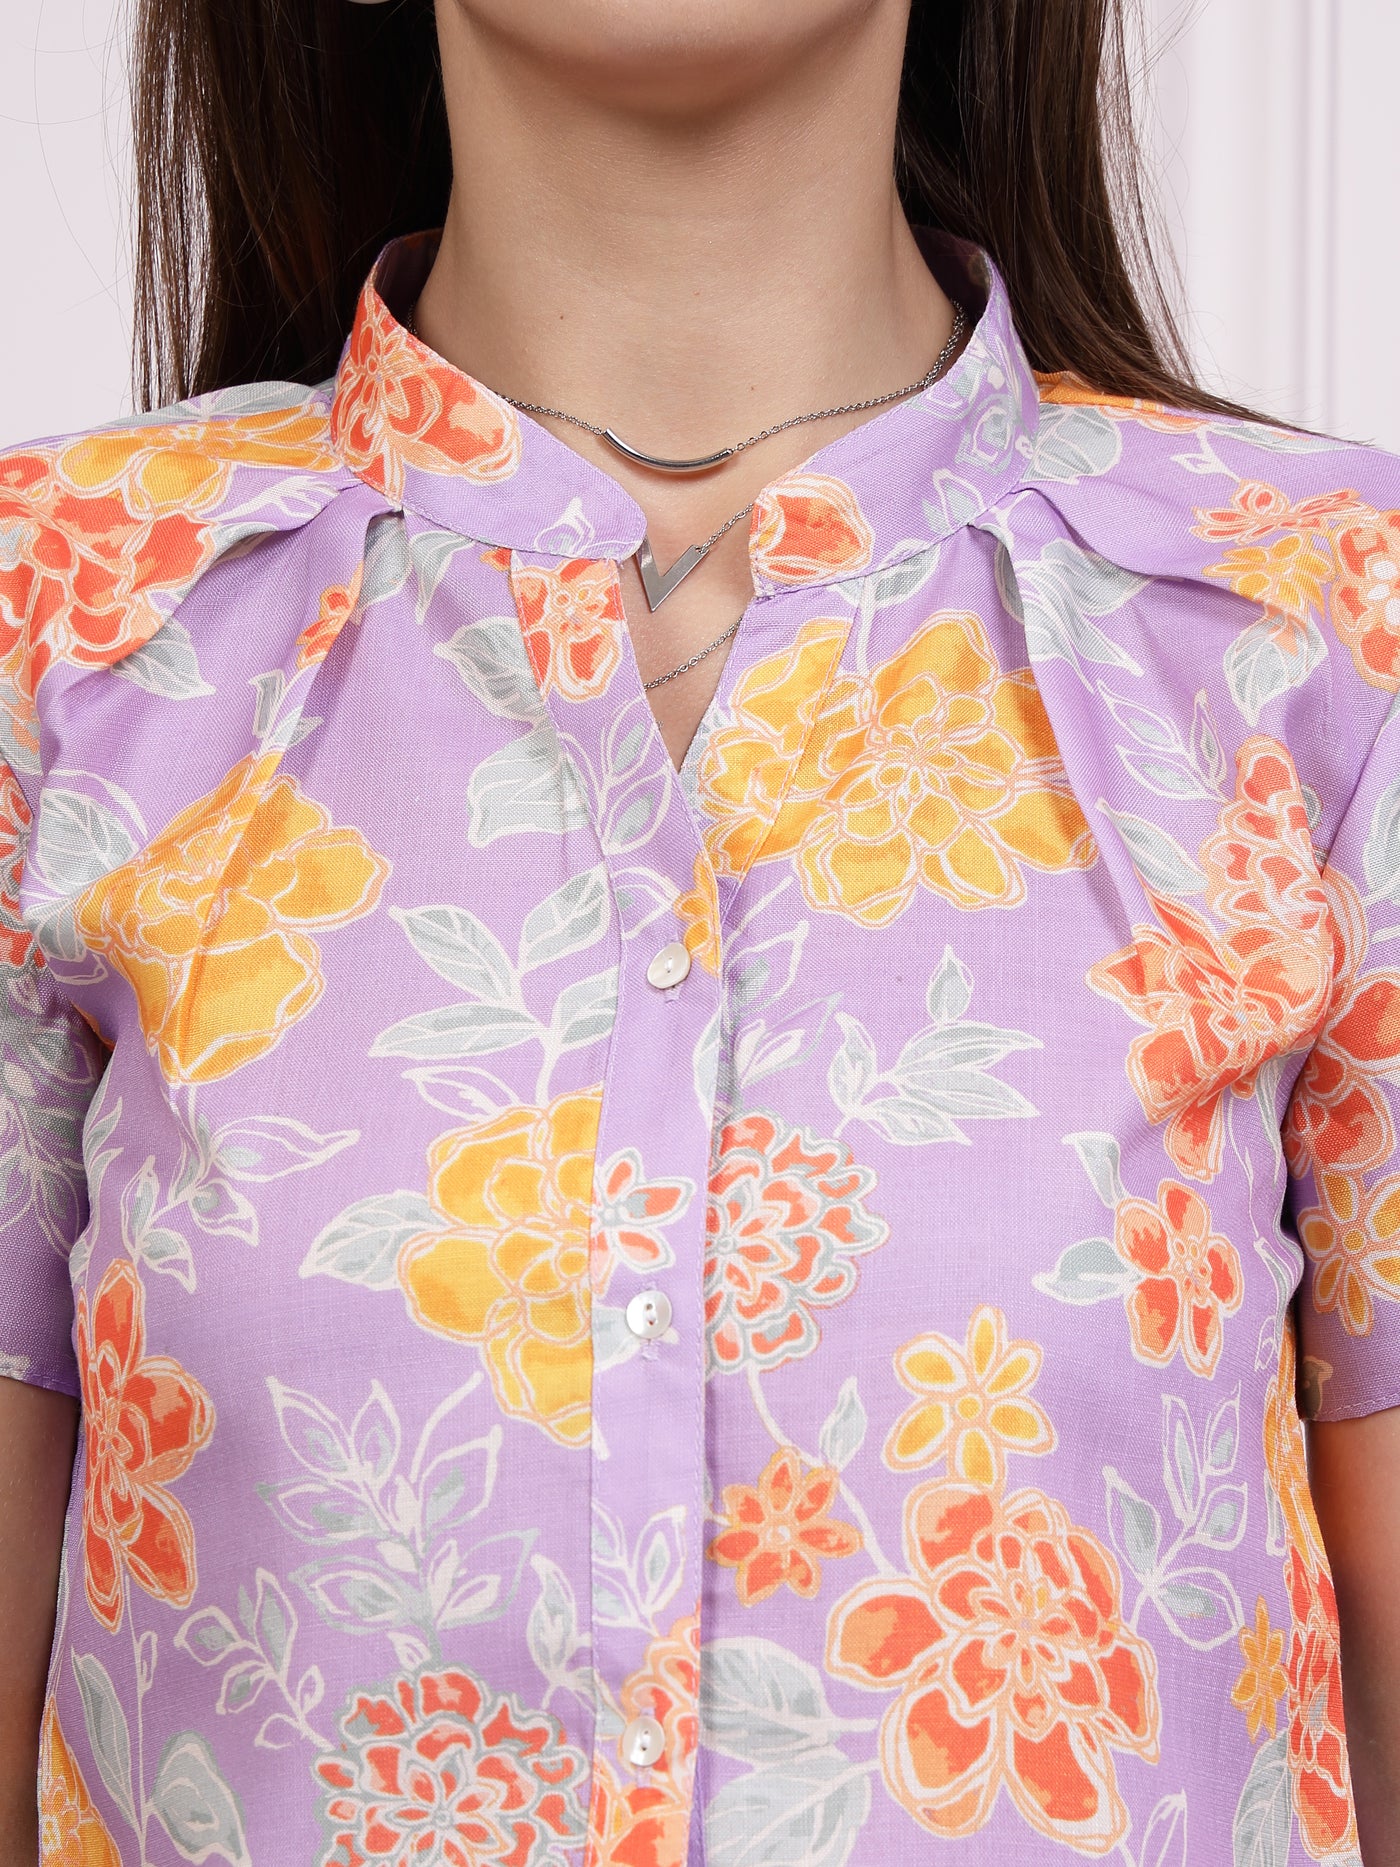 Athena Floral Printed Mandarin Collar Flared Sleeves Linen Shirt Style Top